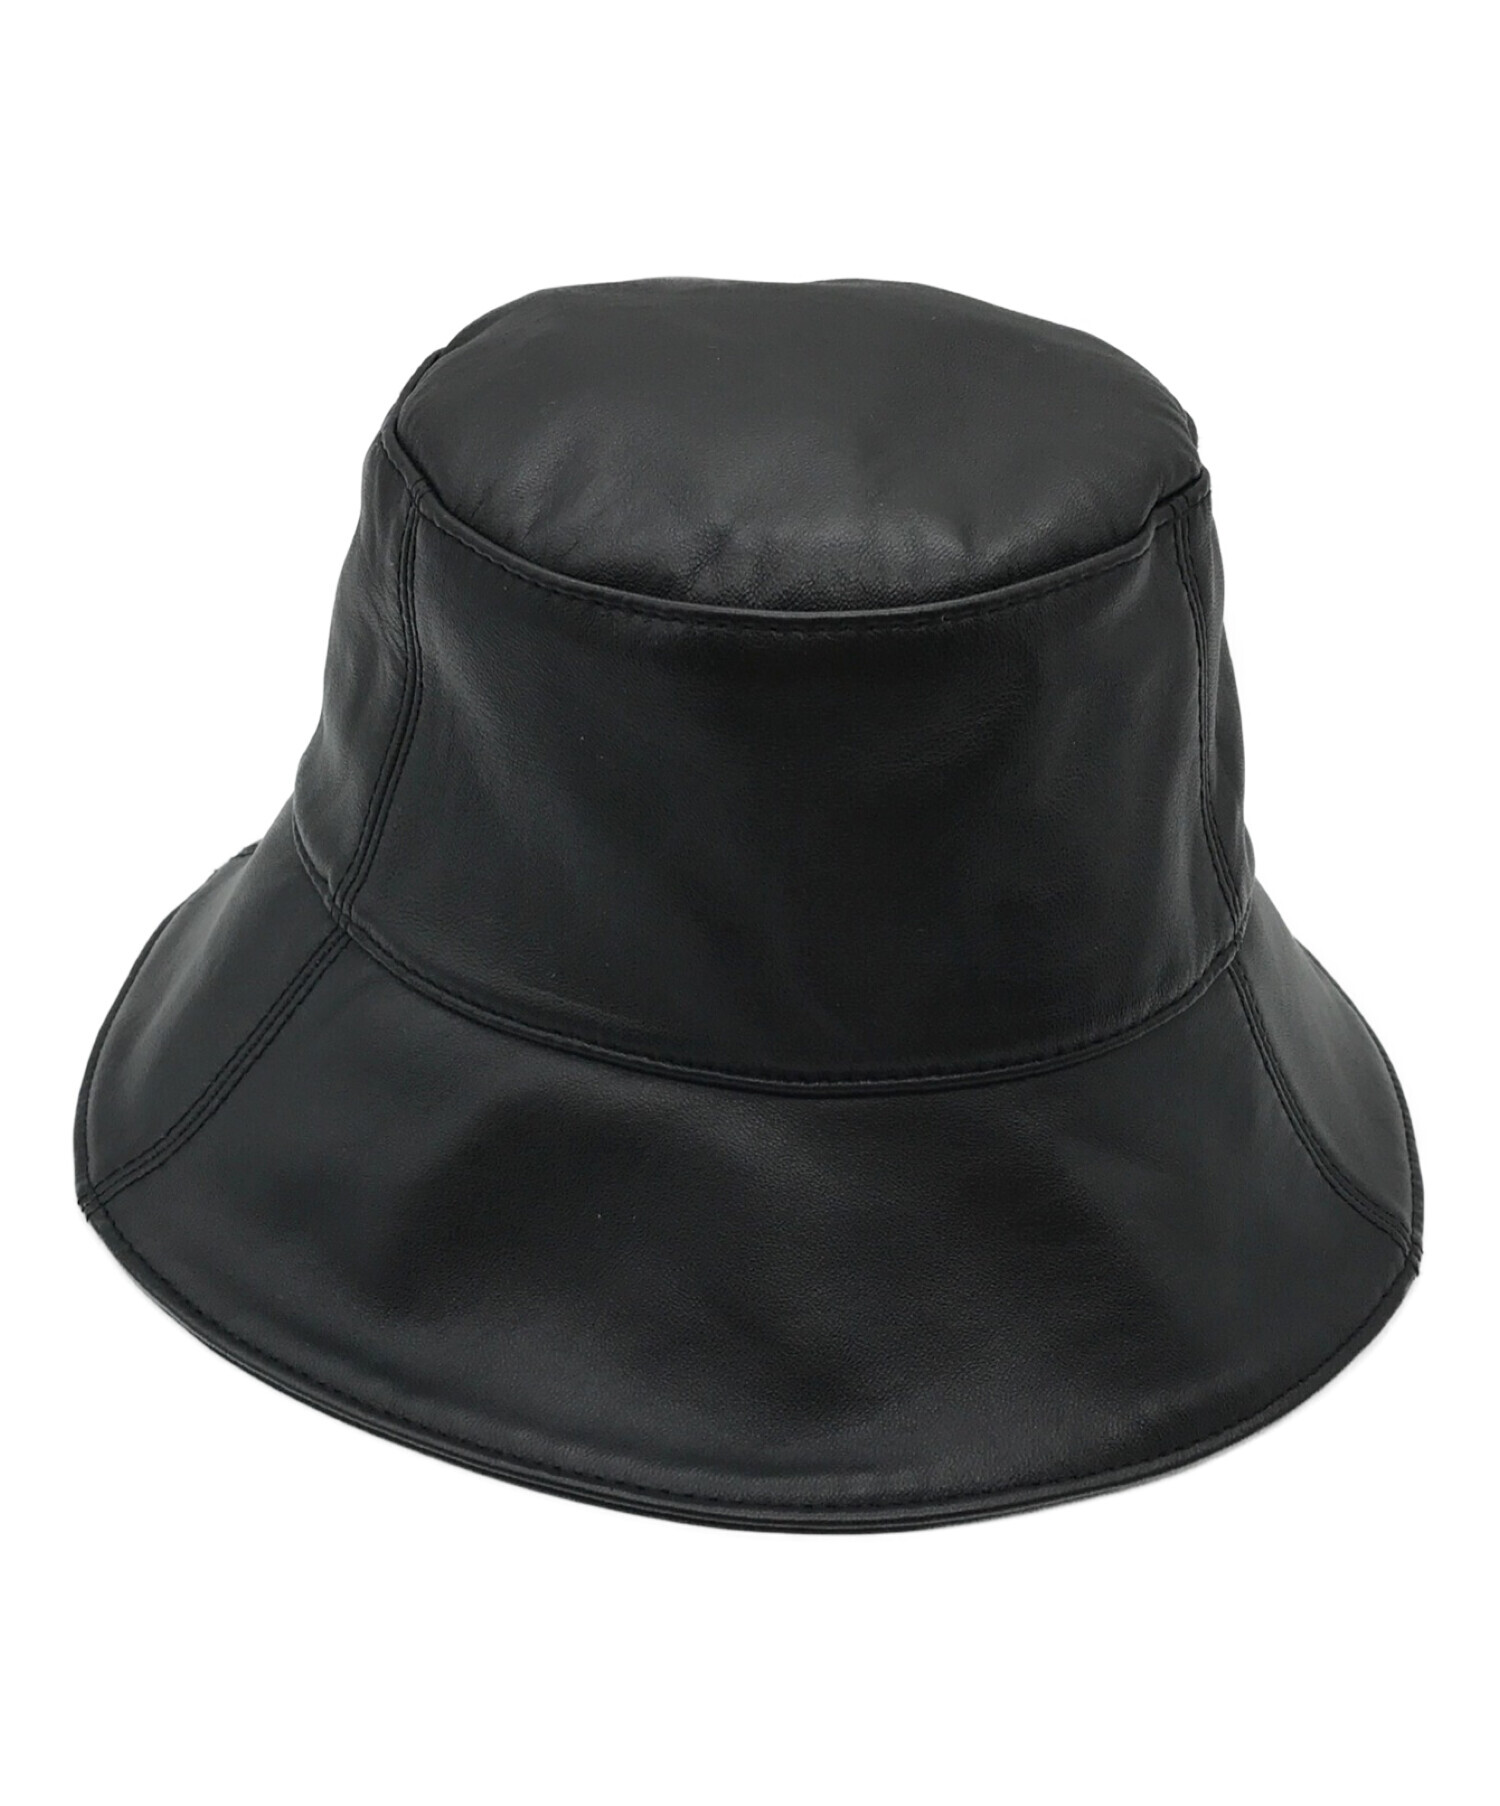 Helenkaminski ヘレンカミンスキー レザー帽子 ブラックBLACK-